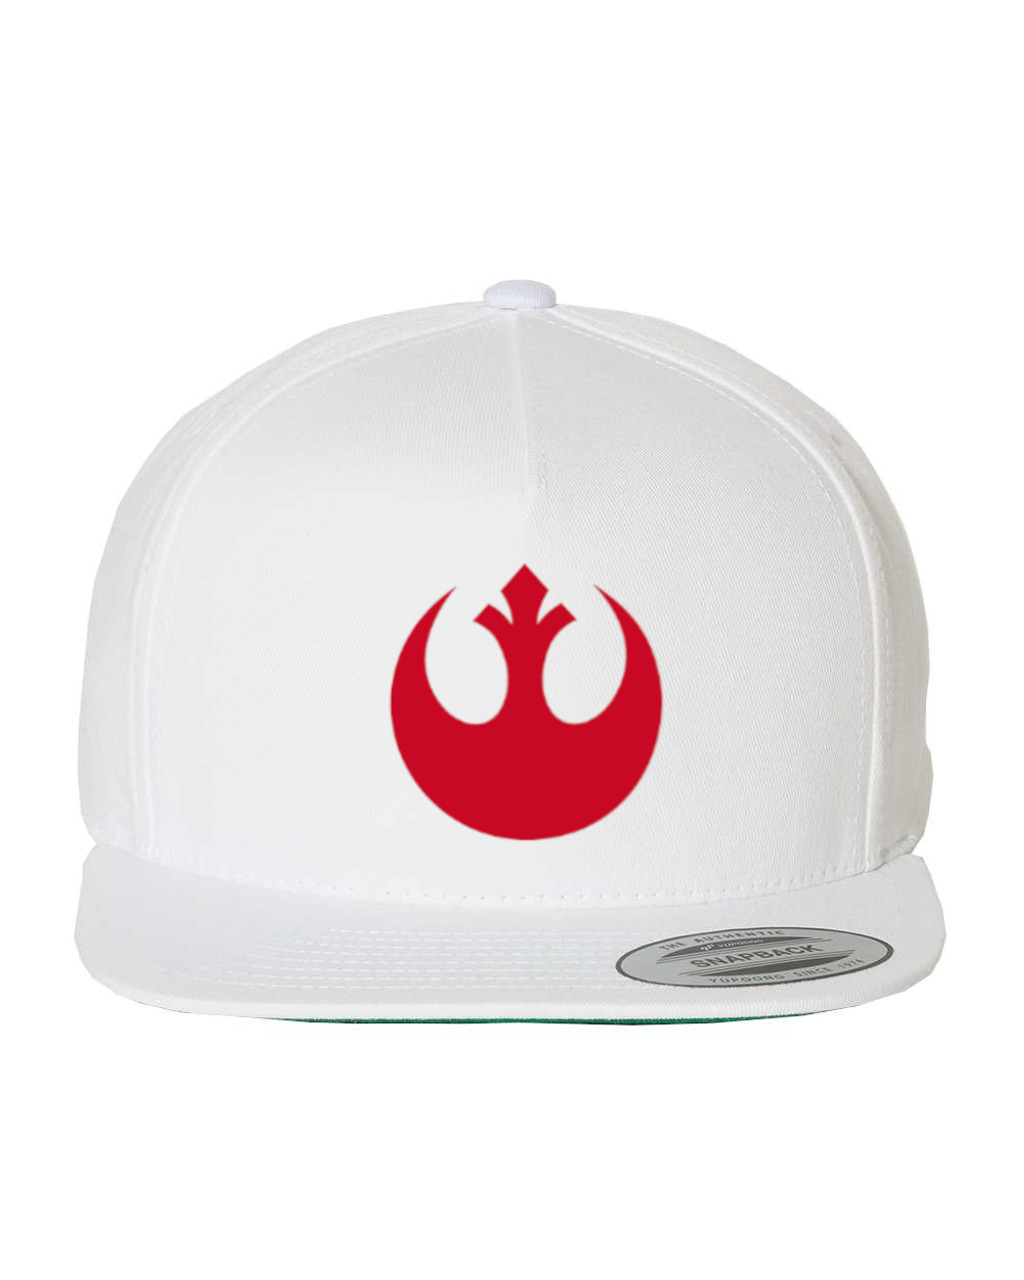 Star Force Rebel Alliance Red Emblem Heat Pressed Flat Bill Hat - Adult White Twill Snap Back Adjustable Cap